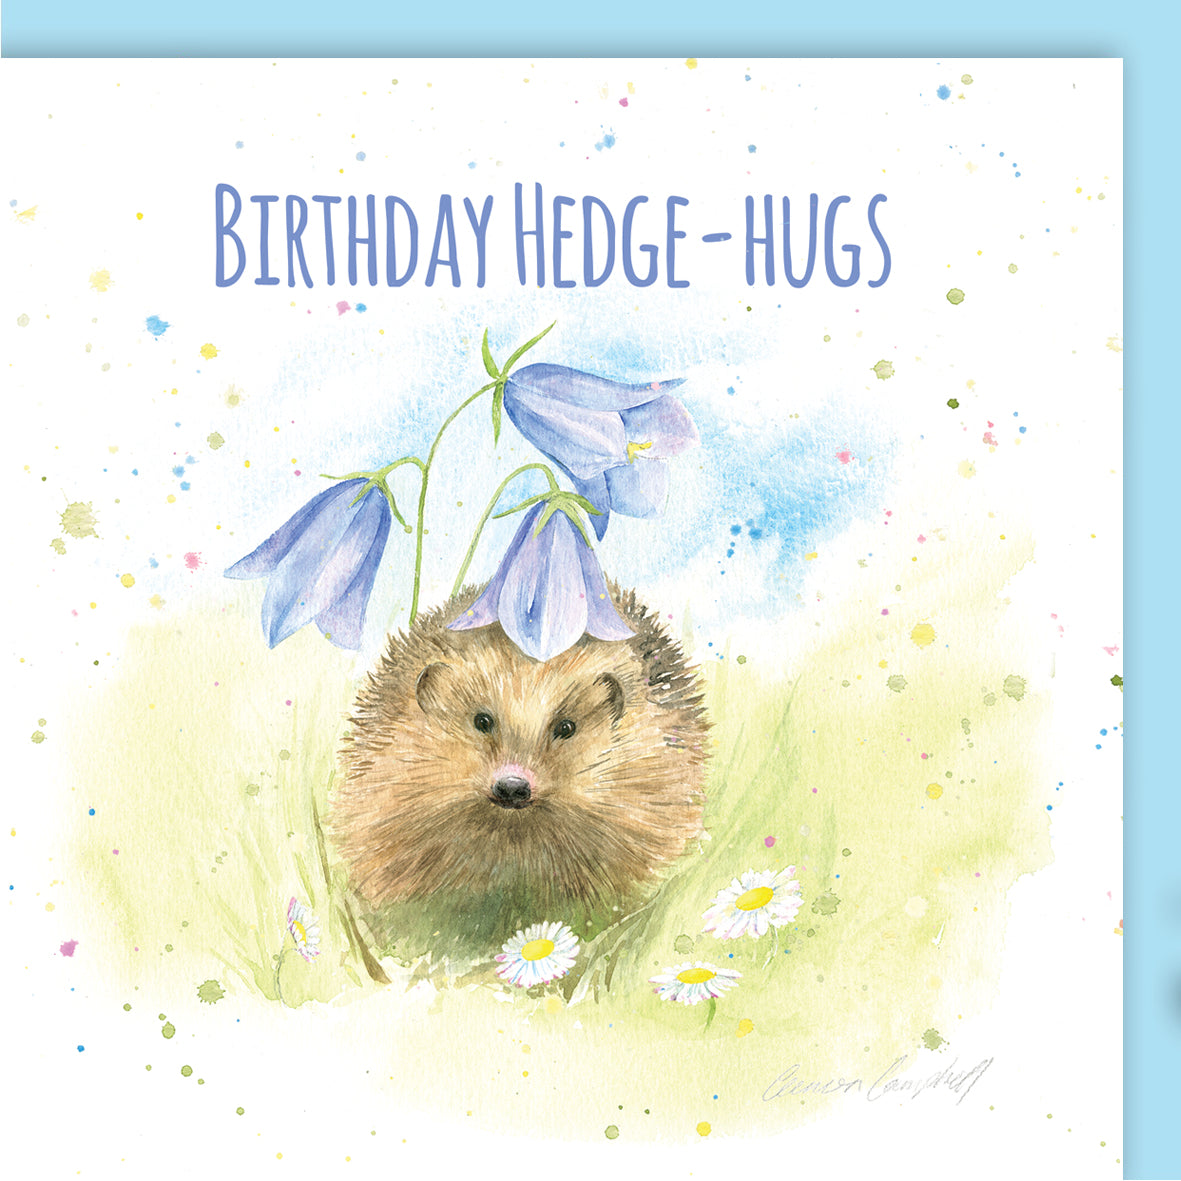 Hedgehog Hedge hugs birthday card by Ceinwen Campbell 